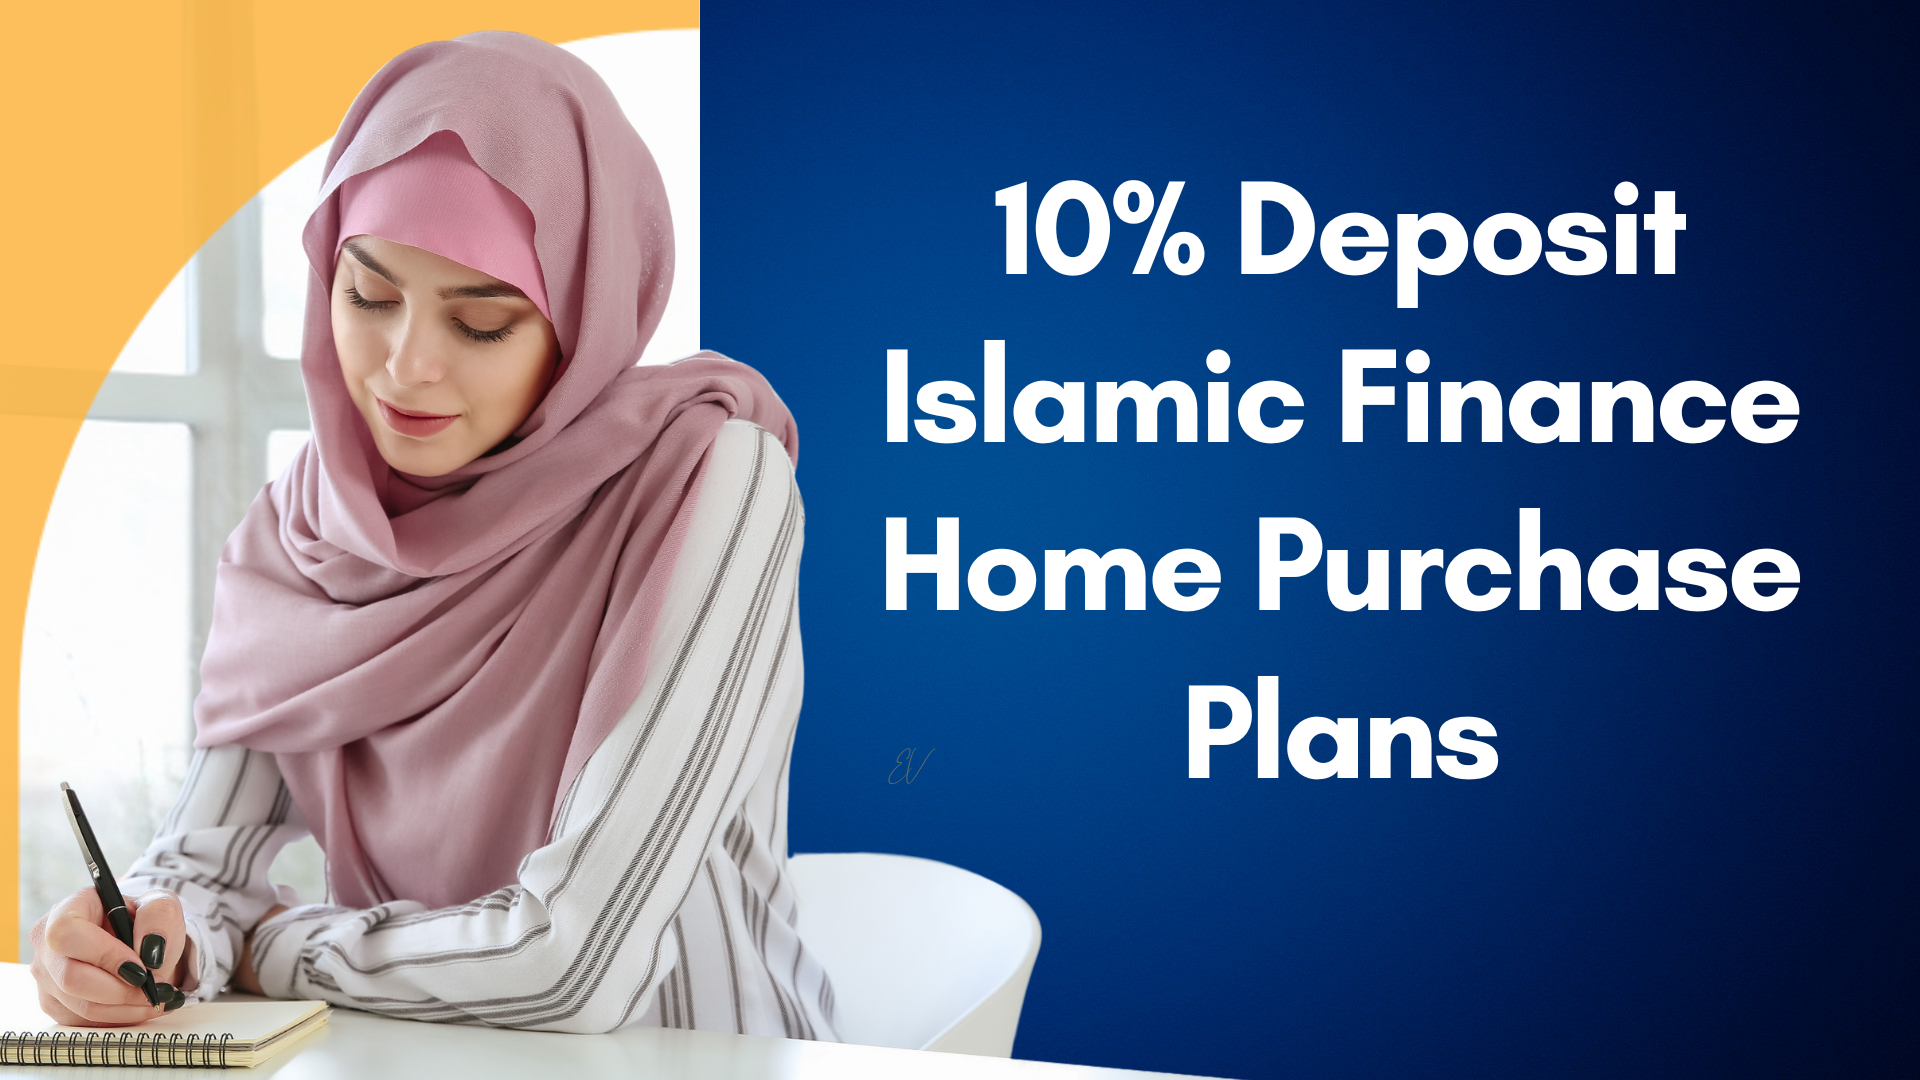 10% deposit Islamic finance home purchase plans image